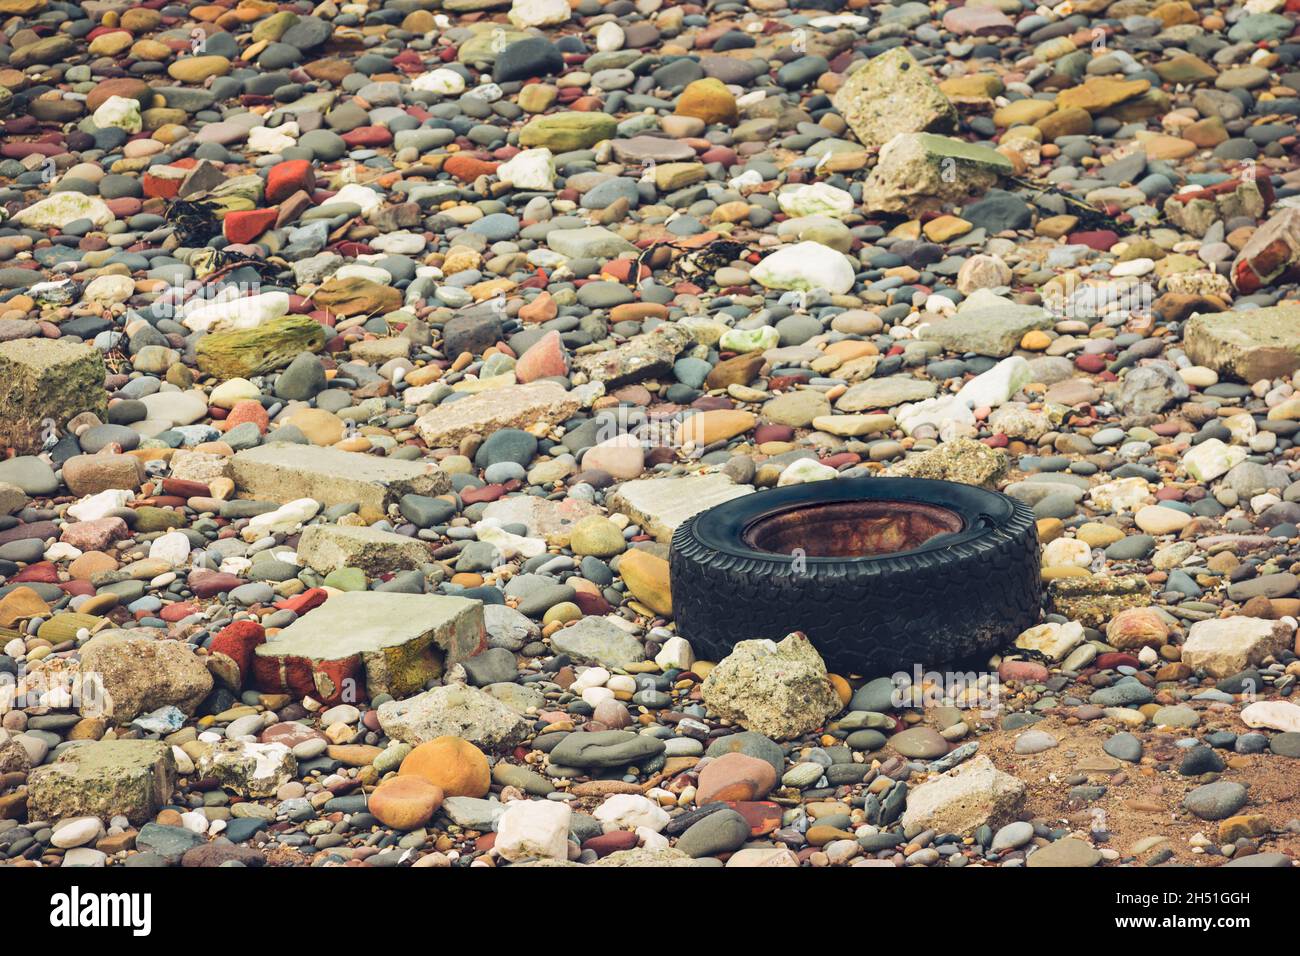 A black car tyre washed onto a colourful shingle beach as marine debris Stock Photo